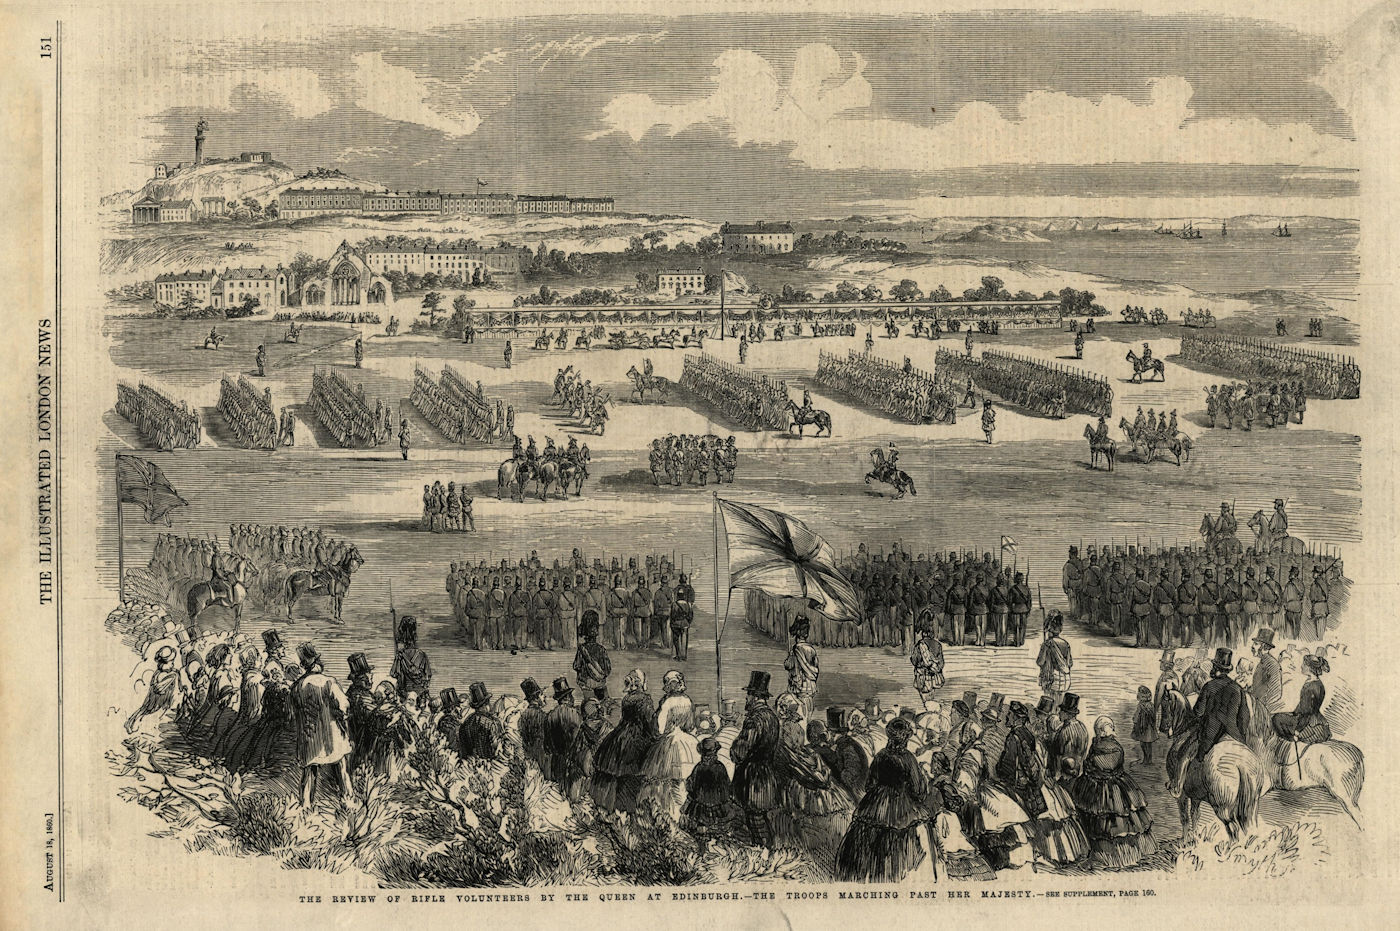 The Rifle Volunteers marching past Queen Victoria in Edinburgh, Scotland 1860